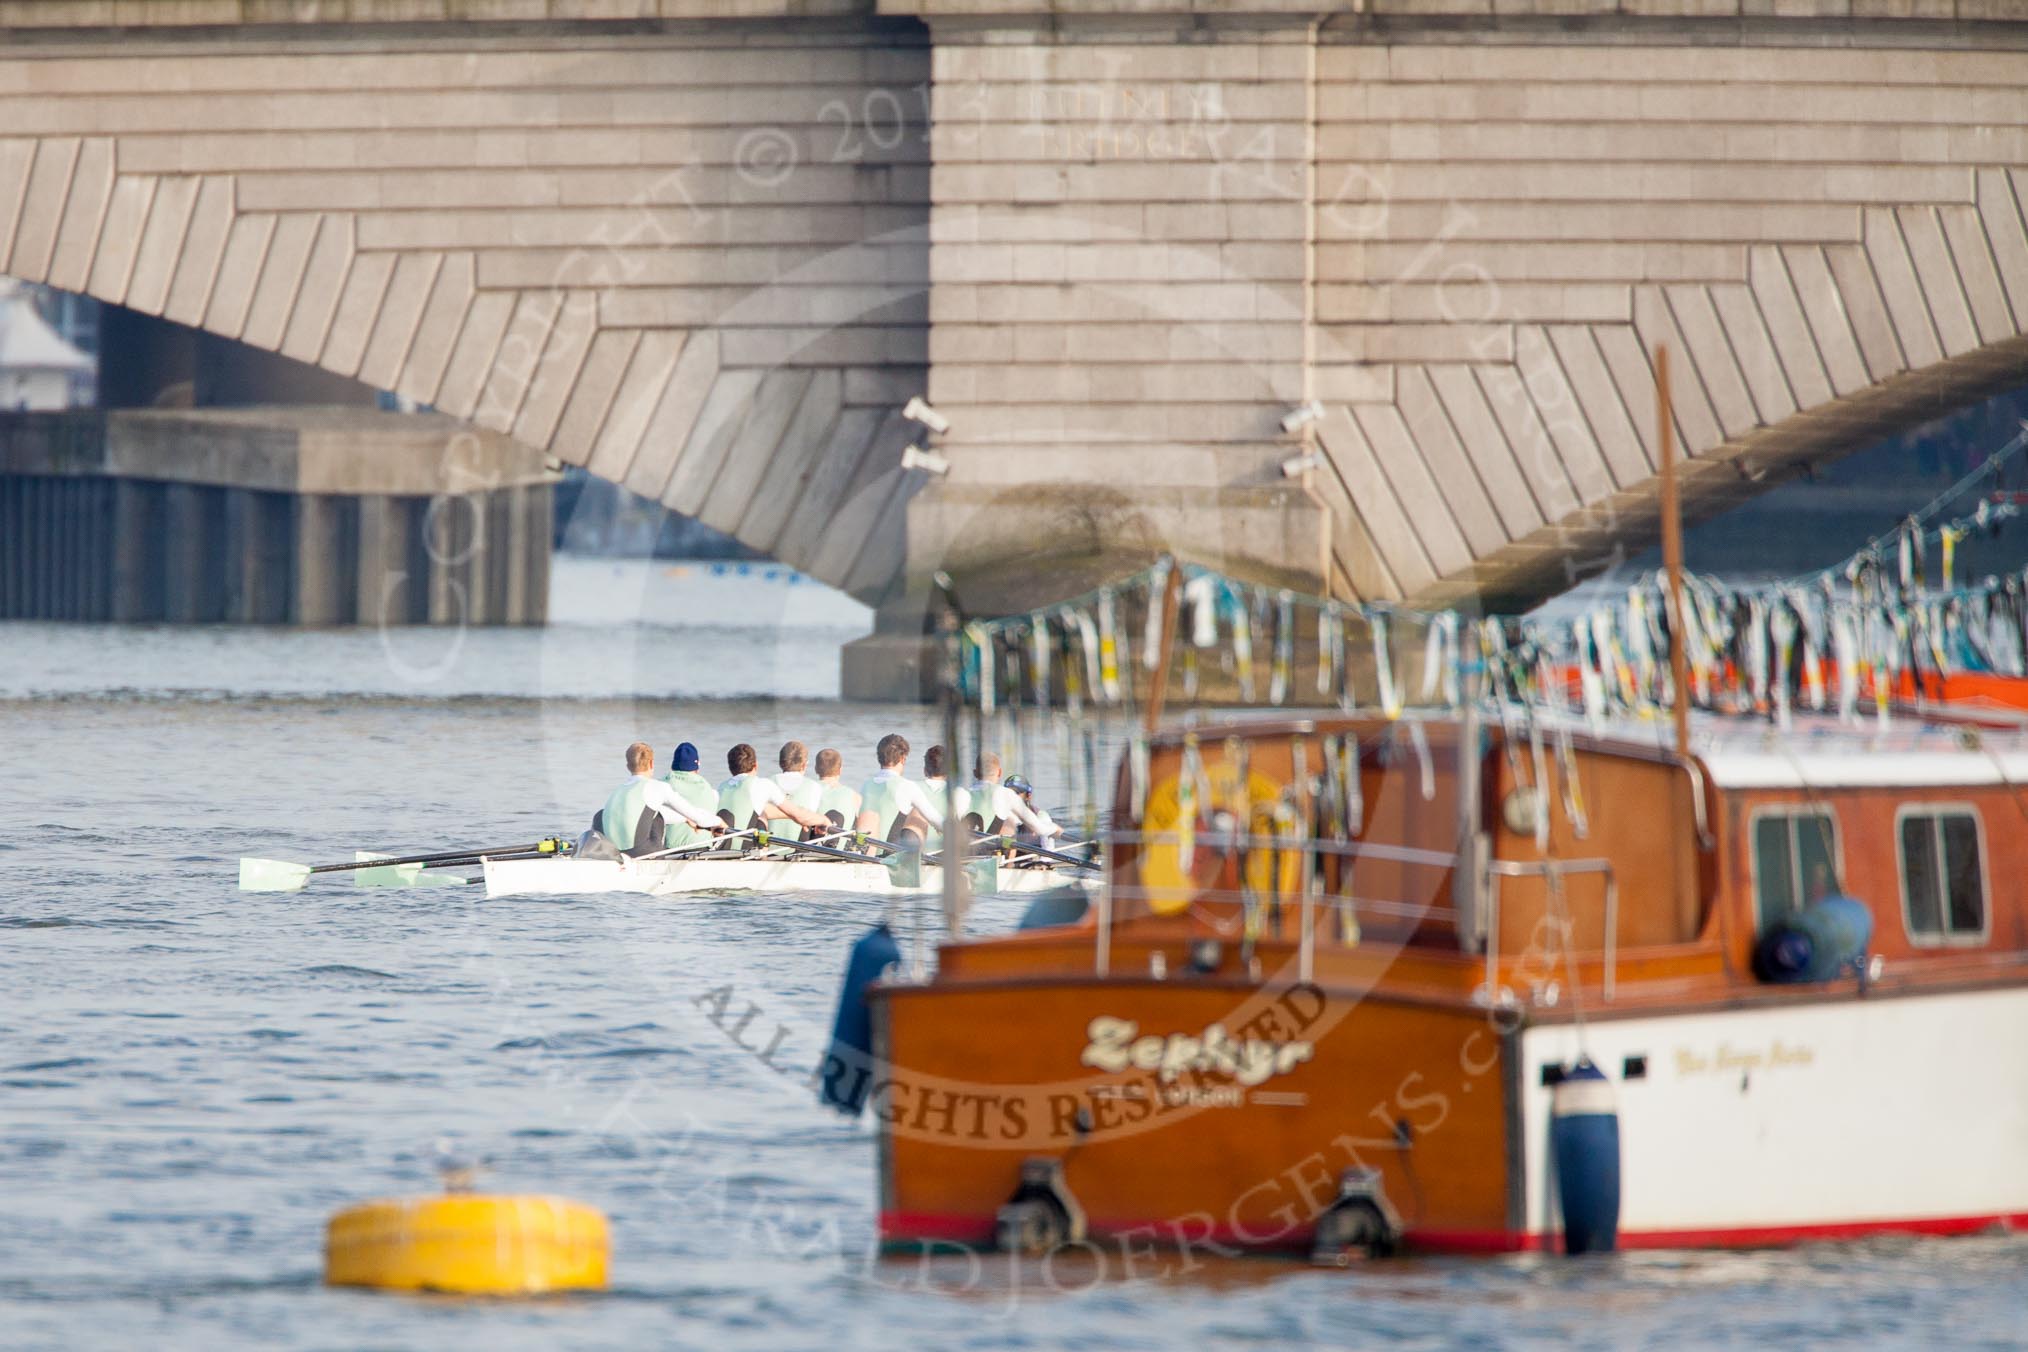 The Boat Race season 2013 - fixture CUBC vs Leander.
River Thames Tideway between Putney Bridge and Mortlake,
London SW15,

United Kingdom,
on 02 March 2013 at 15:57, image #100